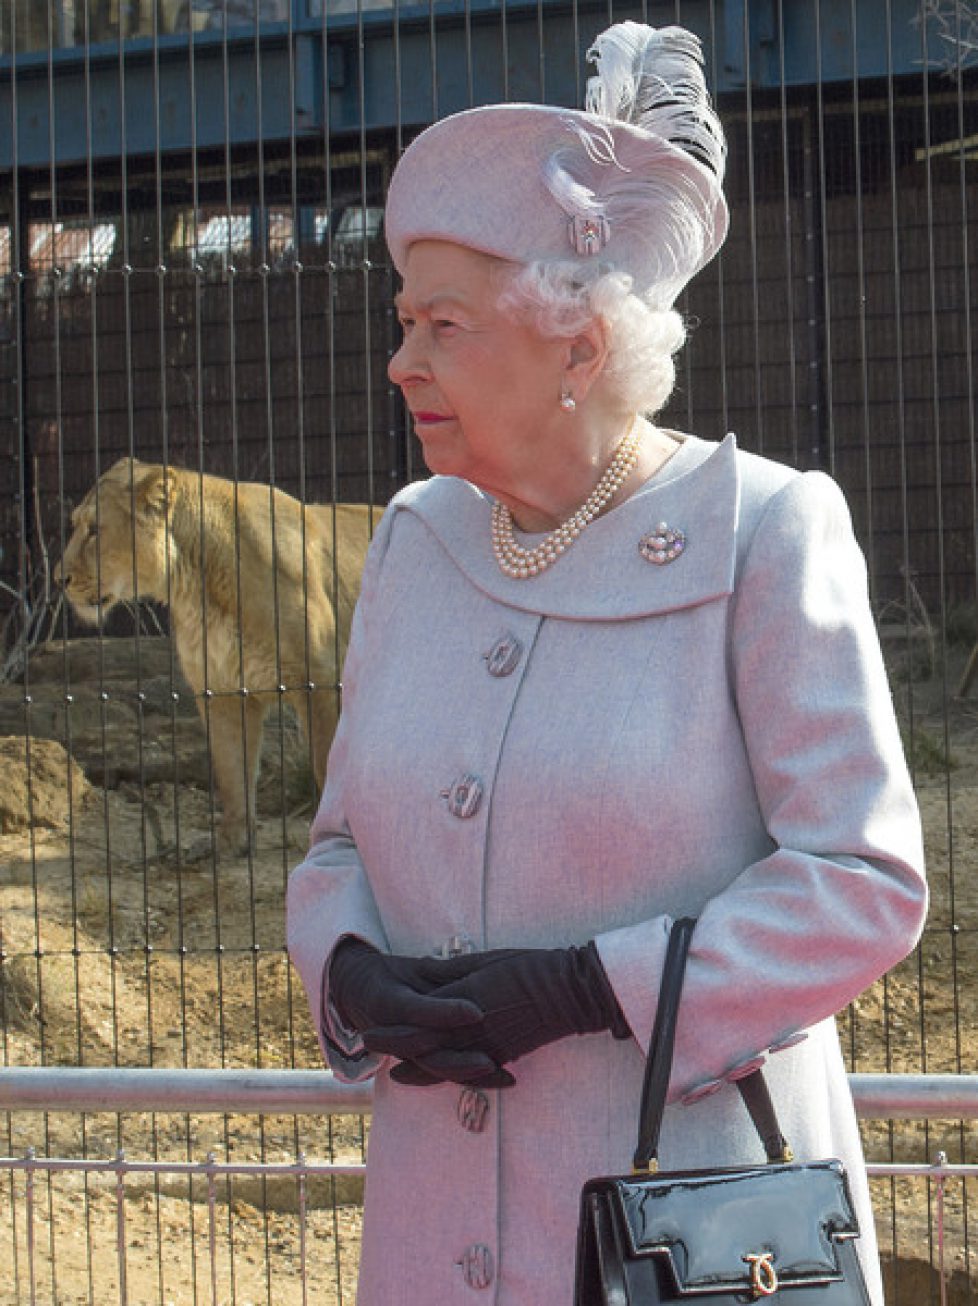 Queen+Duke+Edinburgh+Visit+London+Zoo+Open+nLivLmgTvgSl